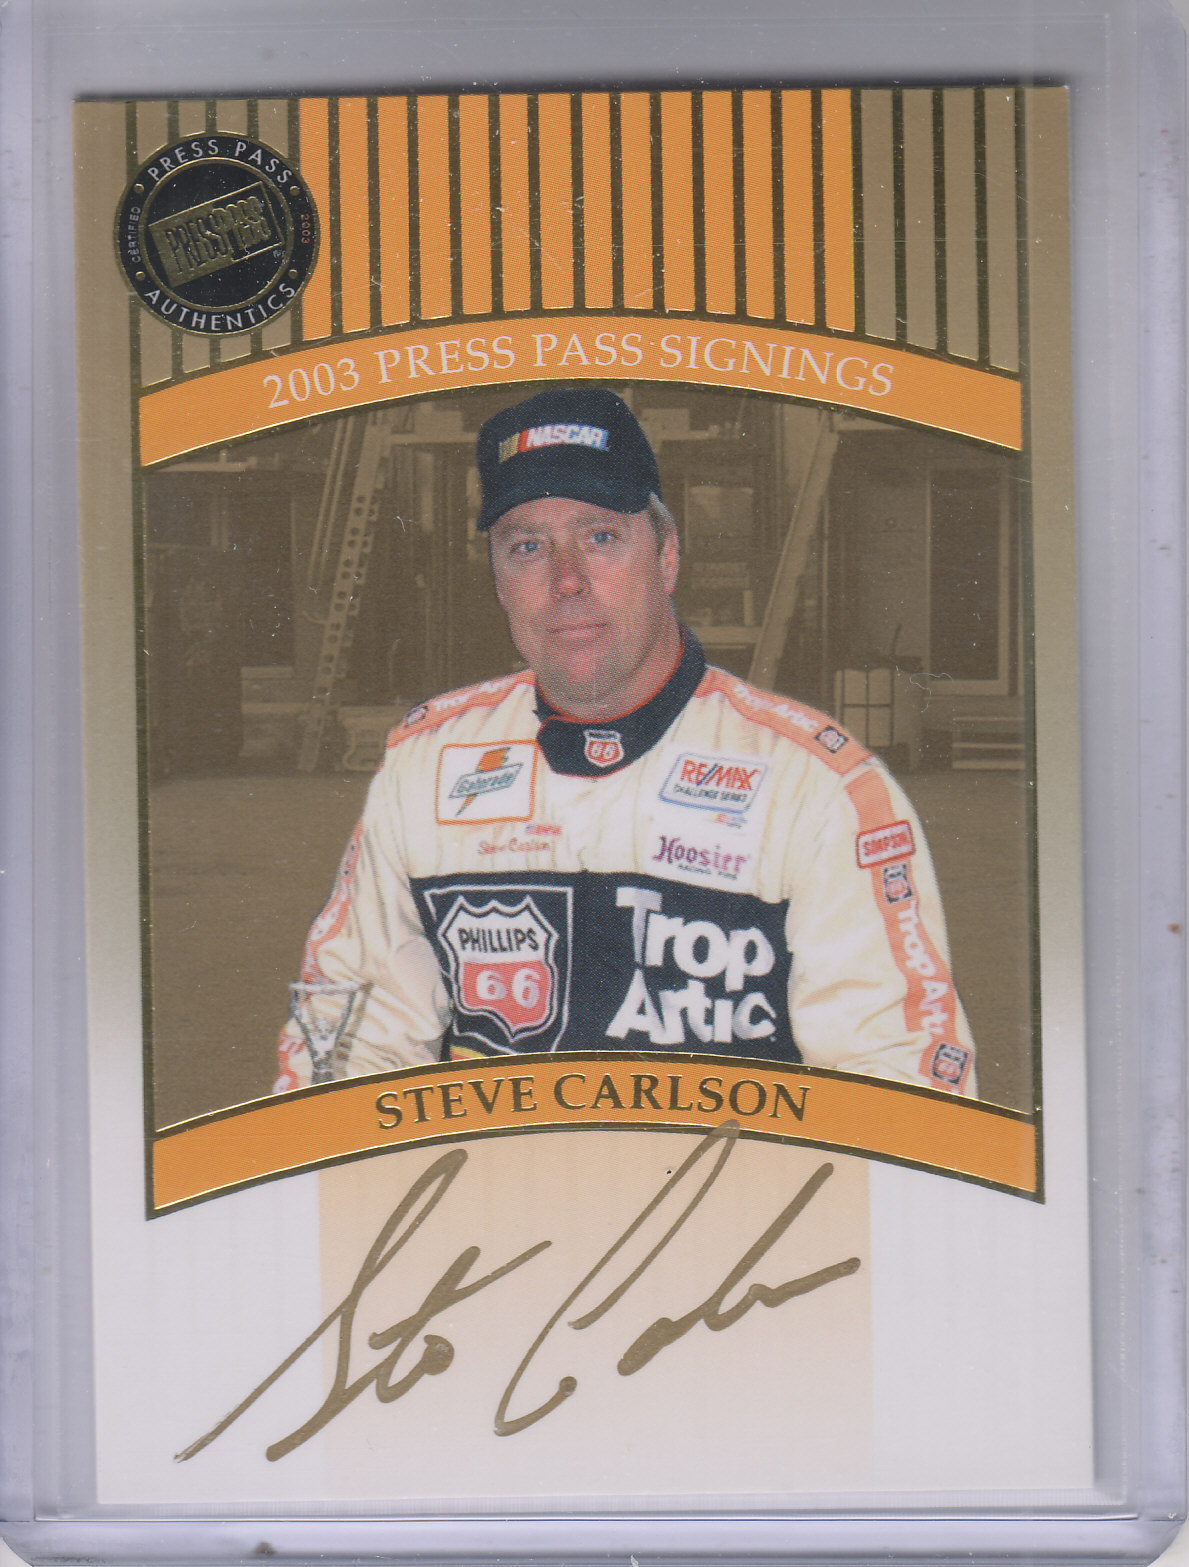 2003 Press Pass Signings Gold #13 Steve Carlson O/P/S/T/V